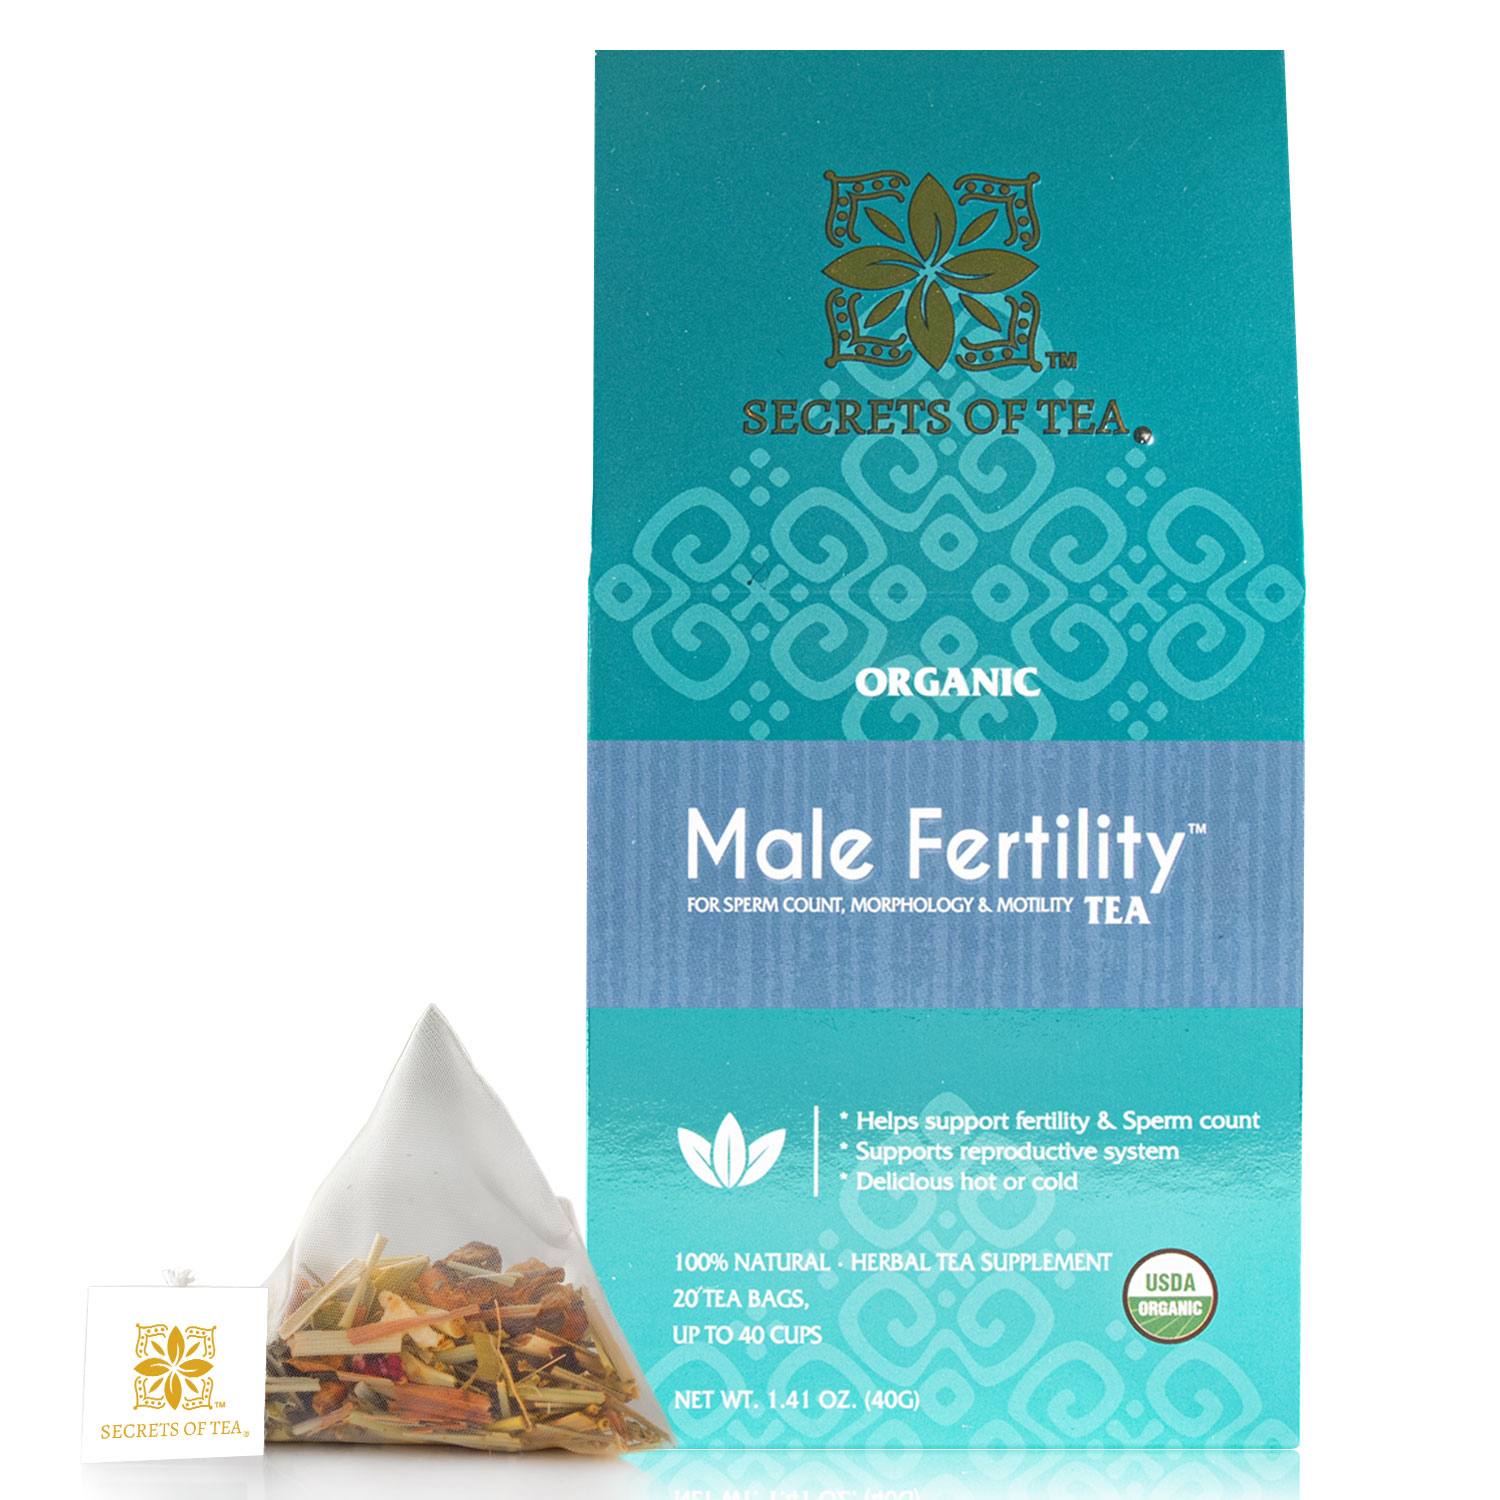 Secrets of Tea Male Fertility Tea 2 innerpacks per case 2.0 oz